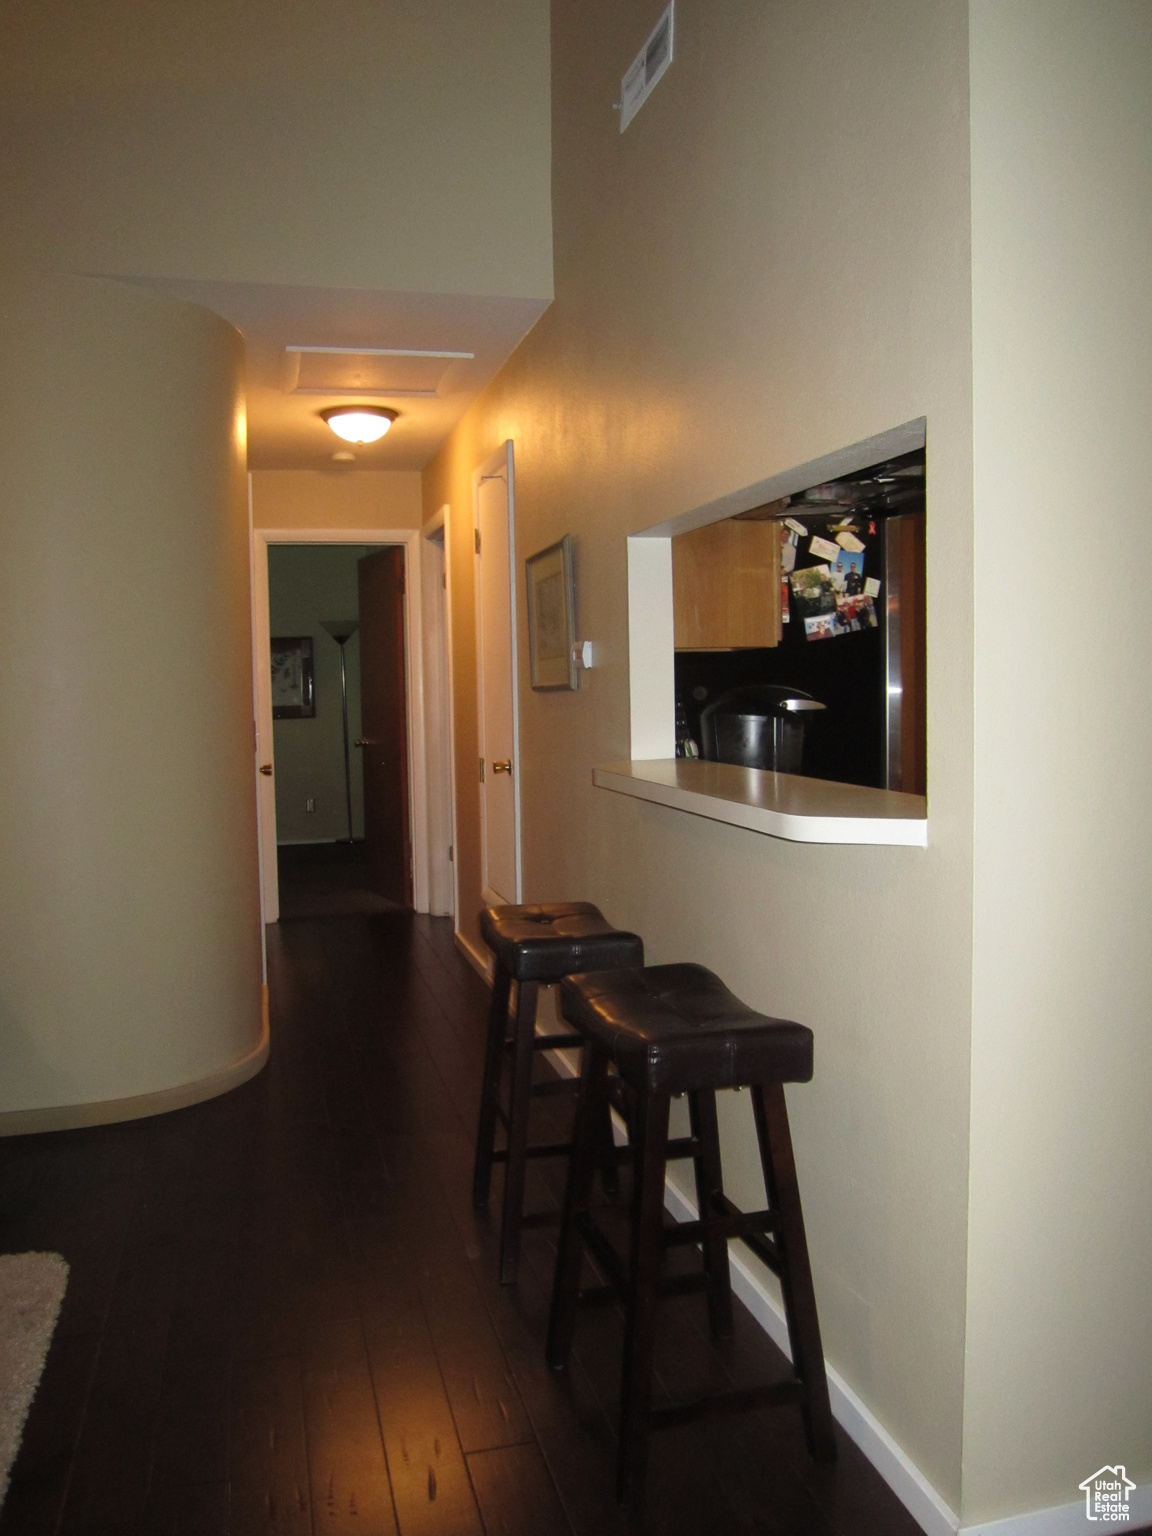 Kitchen and Living room with dark hardwood / wood-style flooring and black fridge